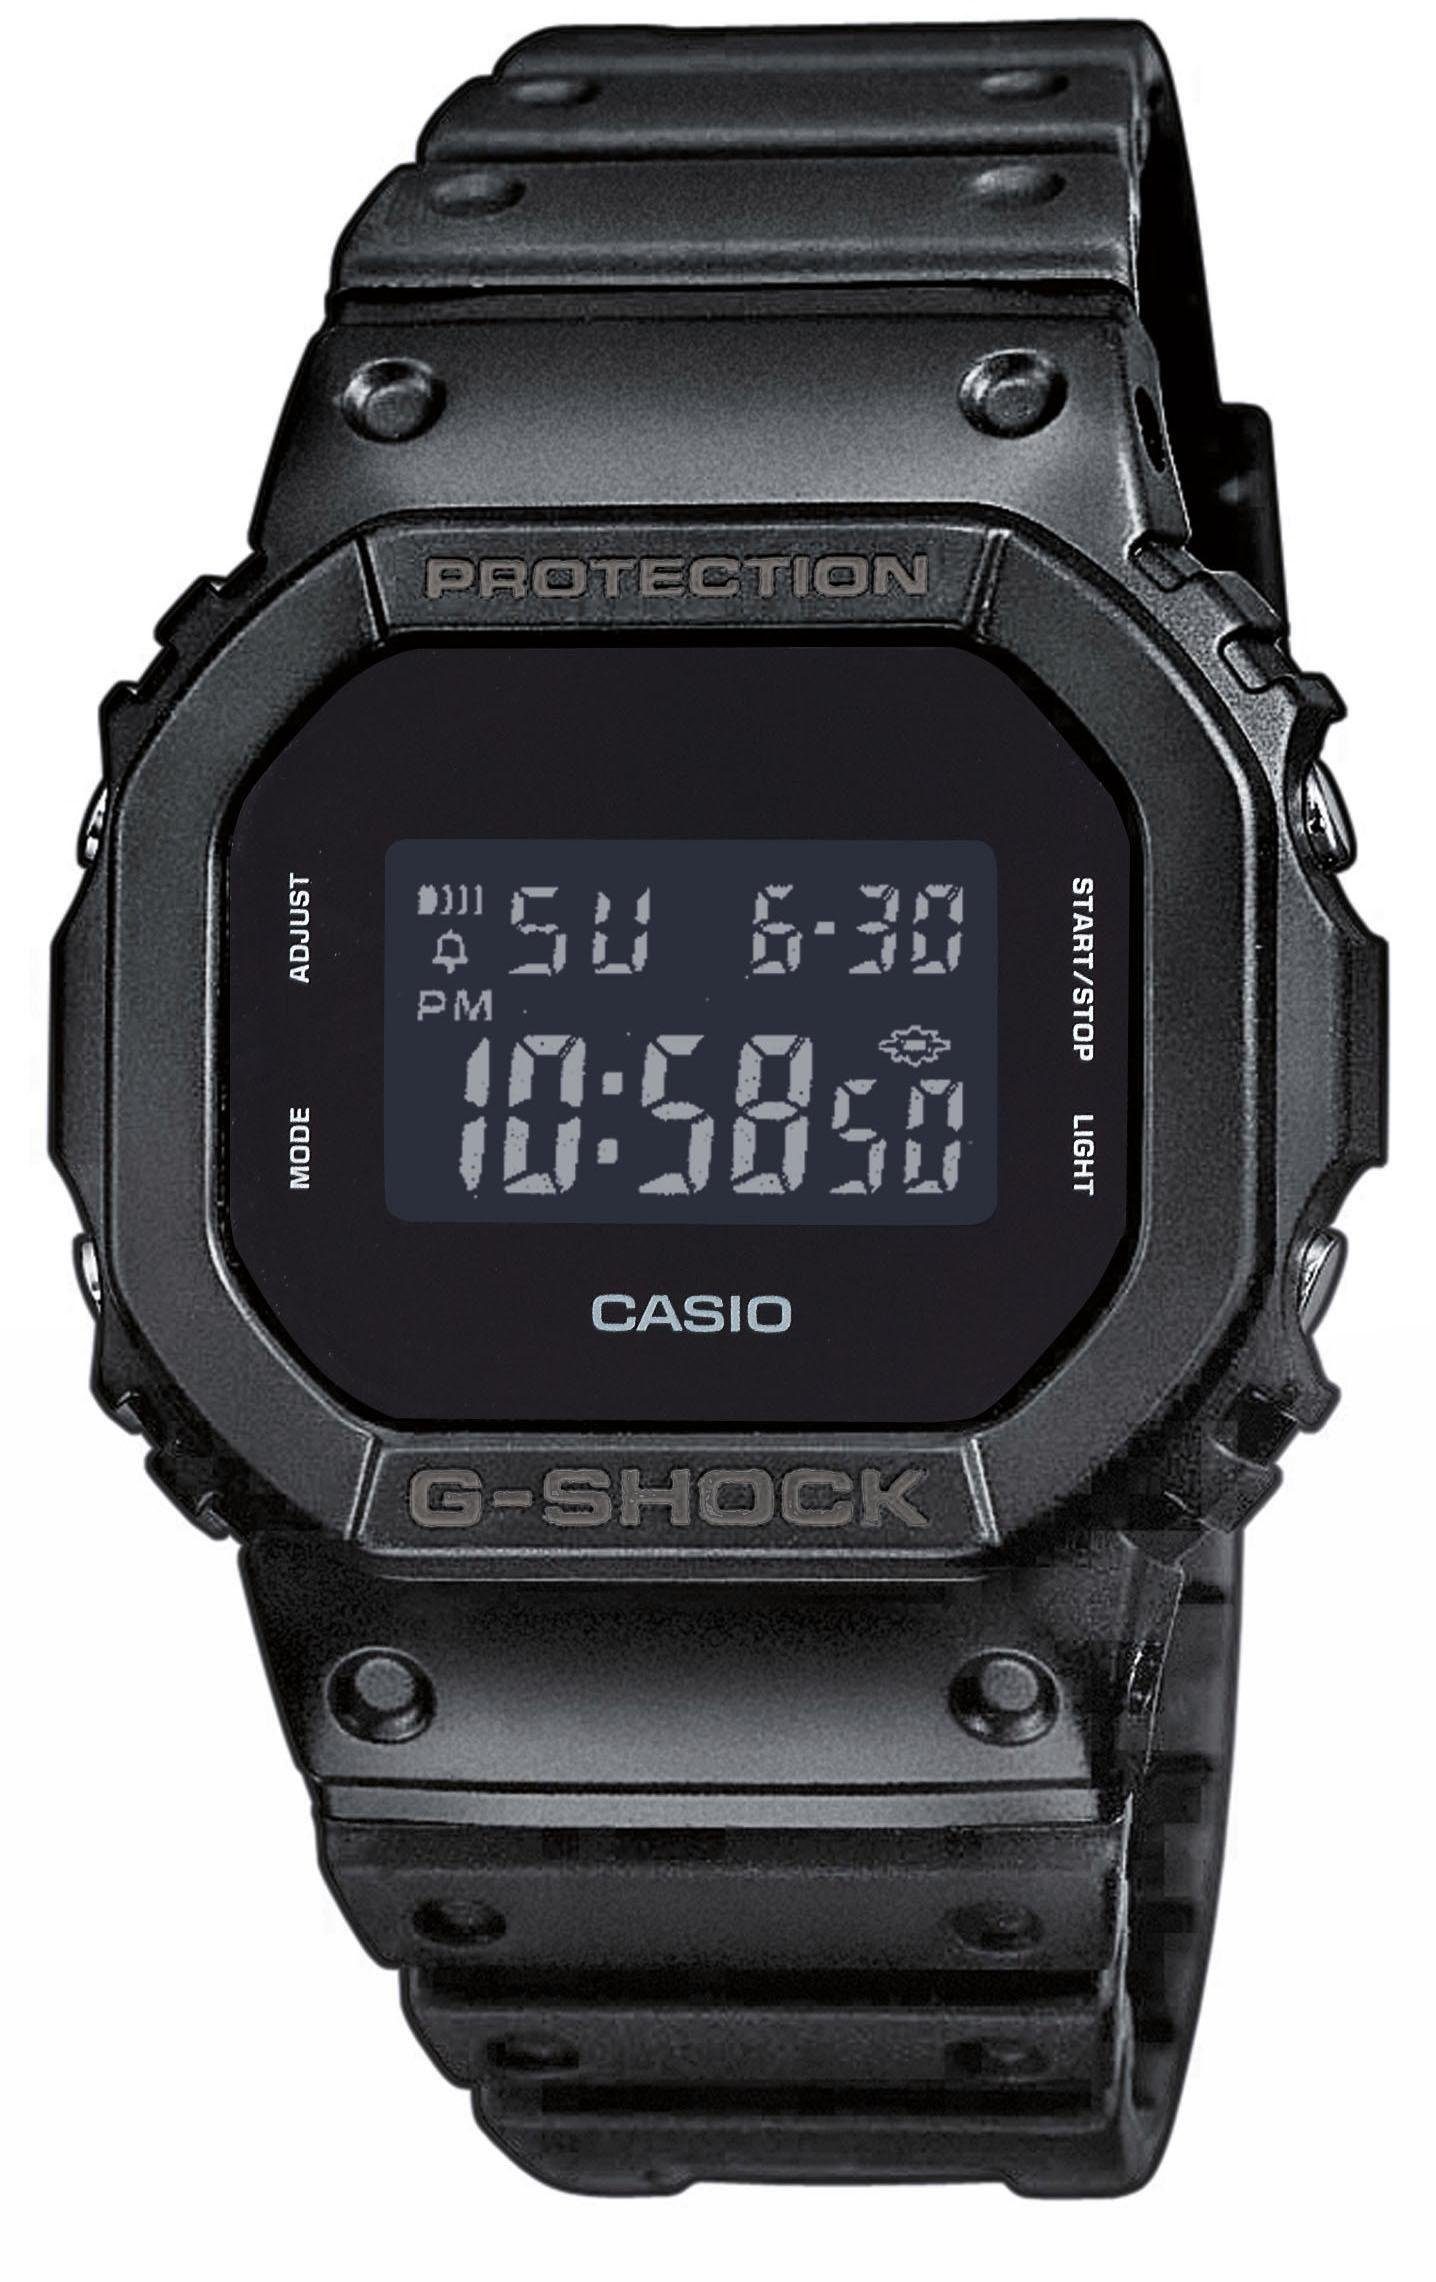 G-SHOCK CASIO Chronograph DW-5600BB-1ER